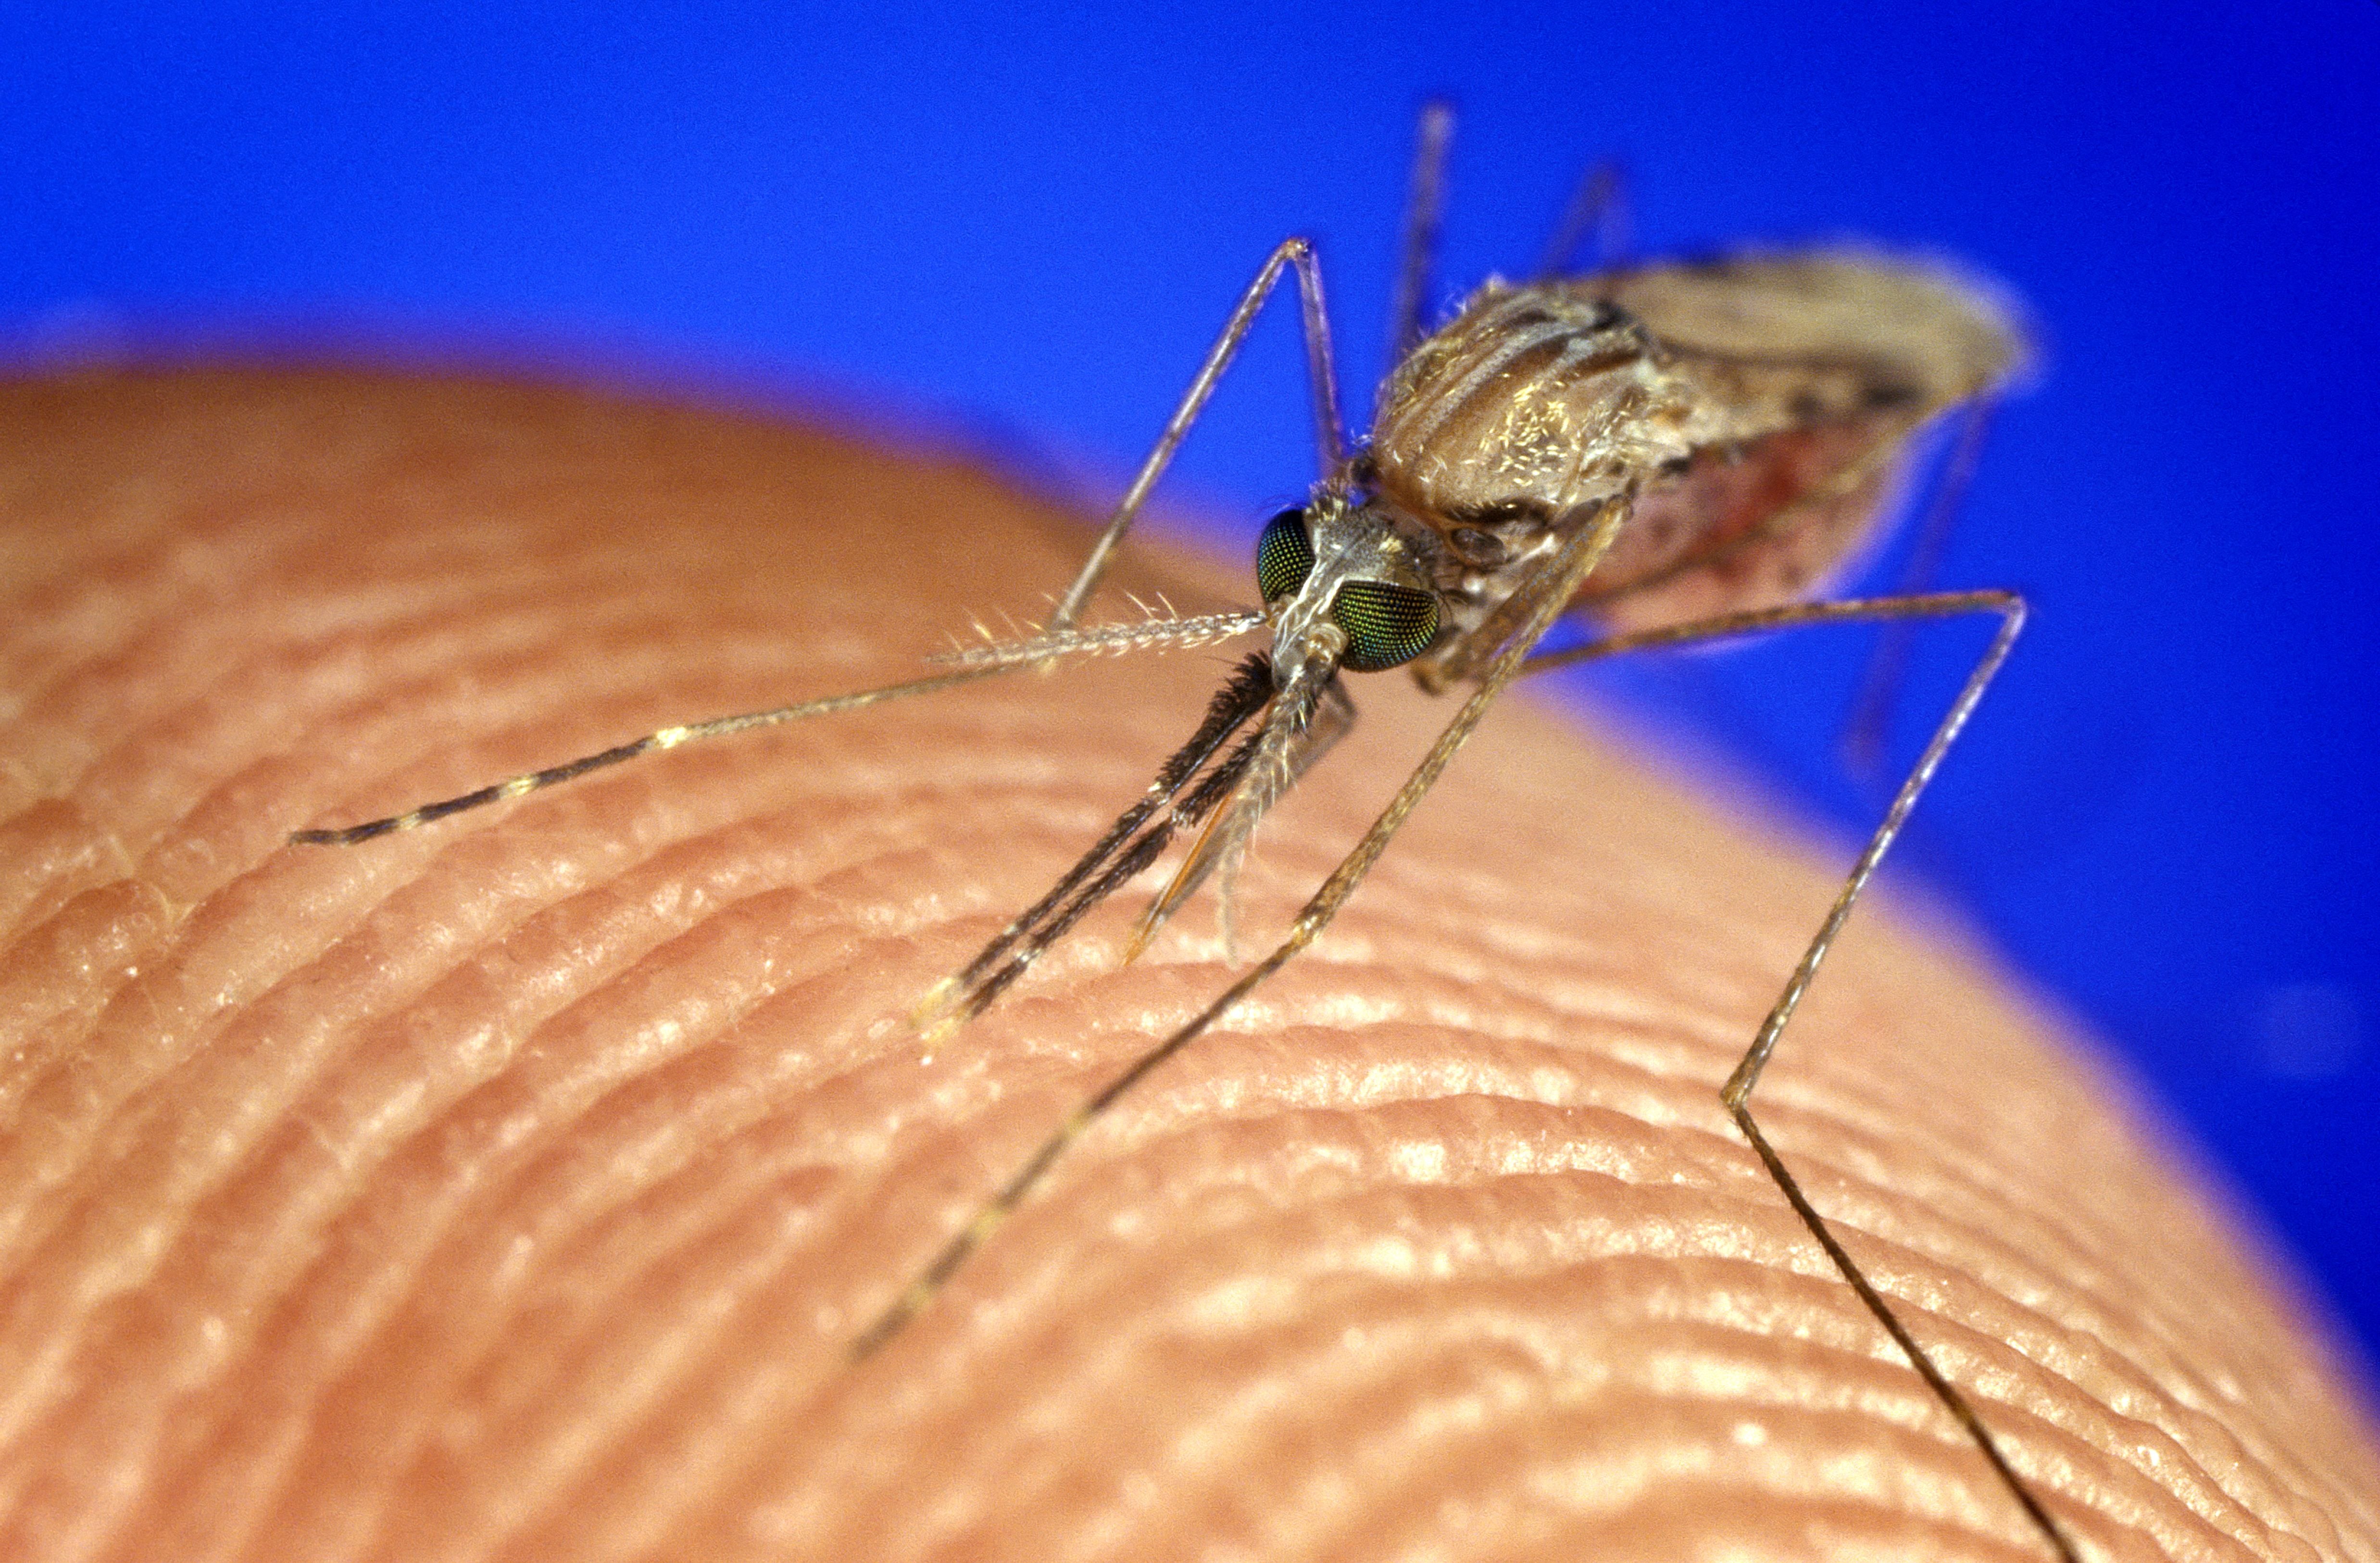 Укус малярии. Малярийный комар Anopheles. Малярийный Москит. Малярийный Москит анофелес. Комары Anopheles gambiae малярийные.